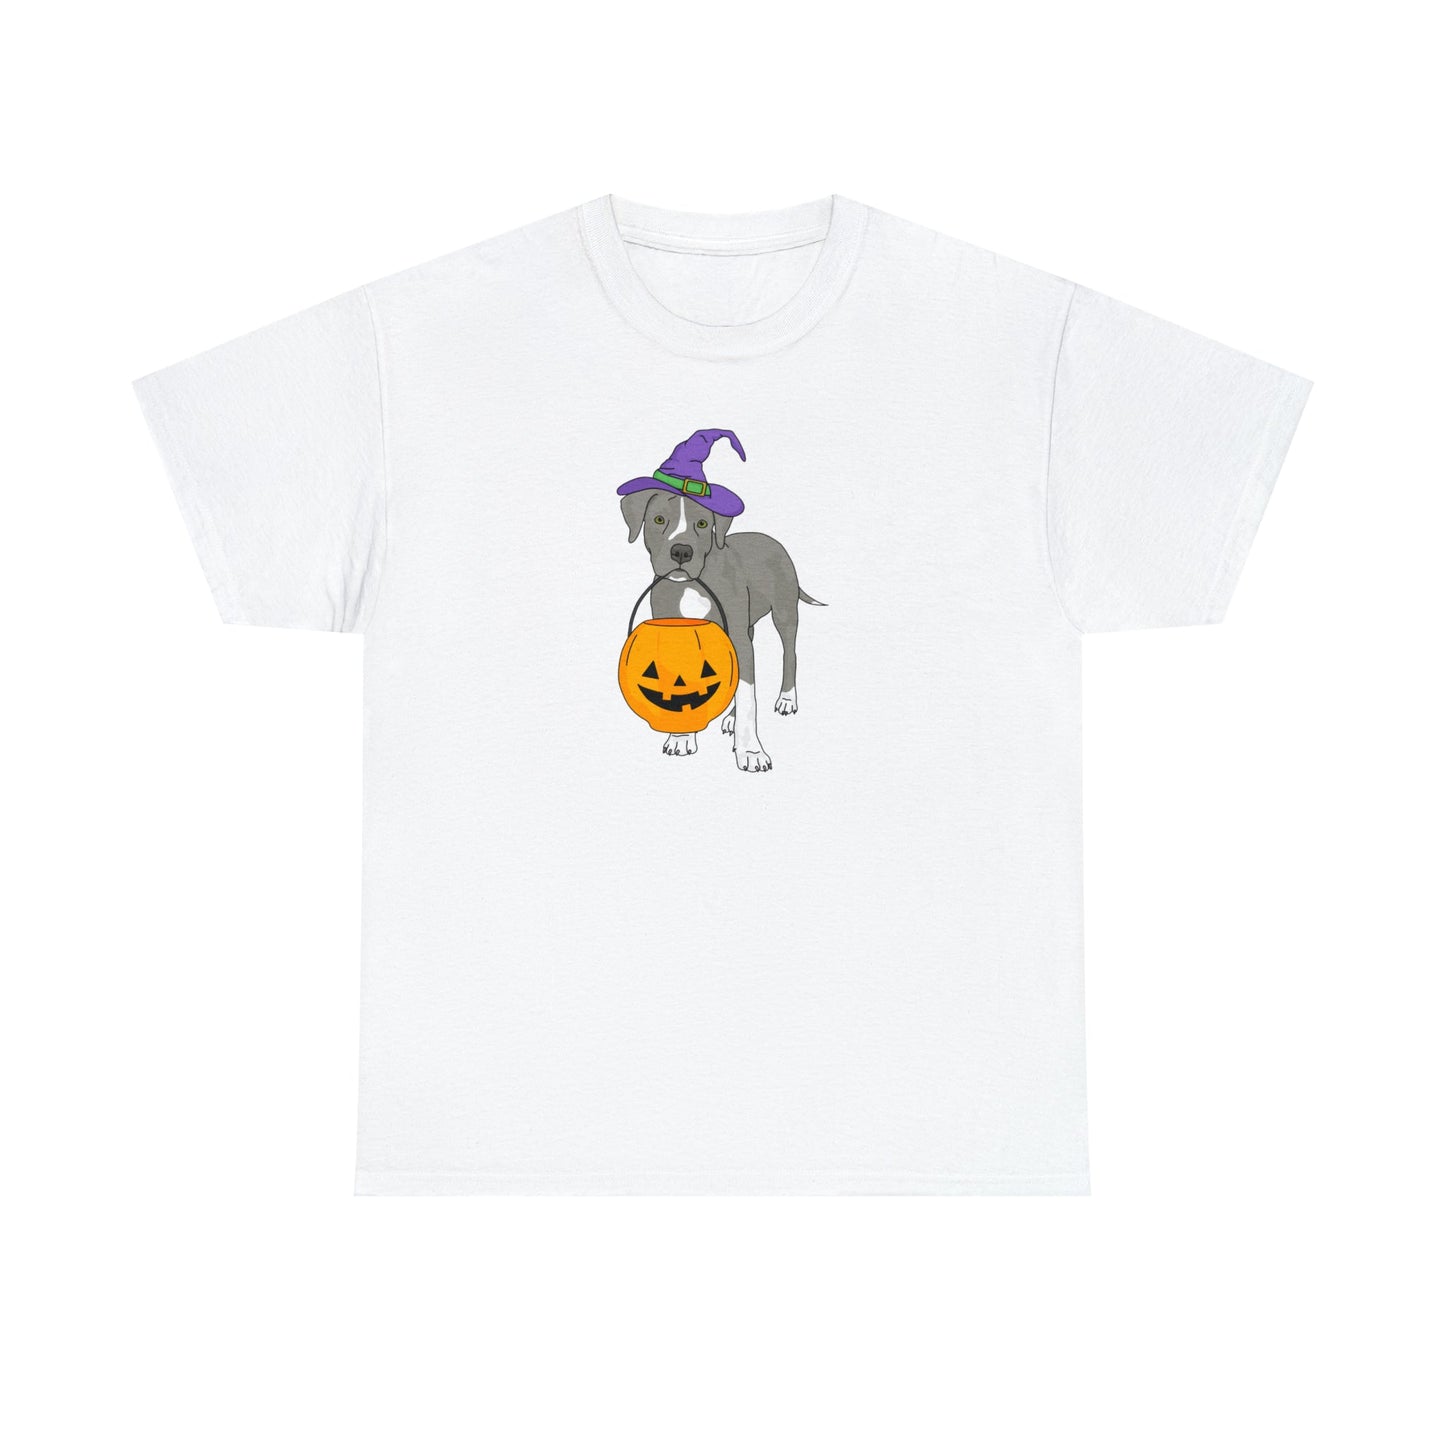 Witchy Puppy | T-shirt - Detezi Designs-17900053389332948036